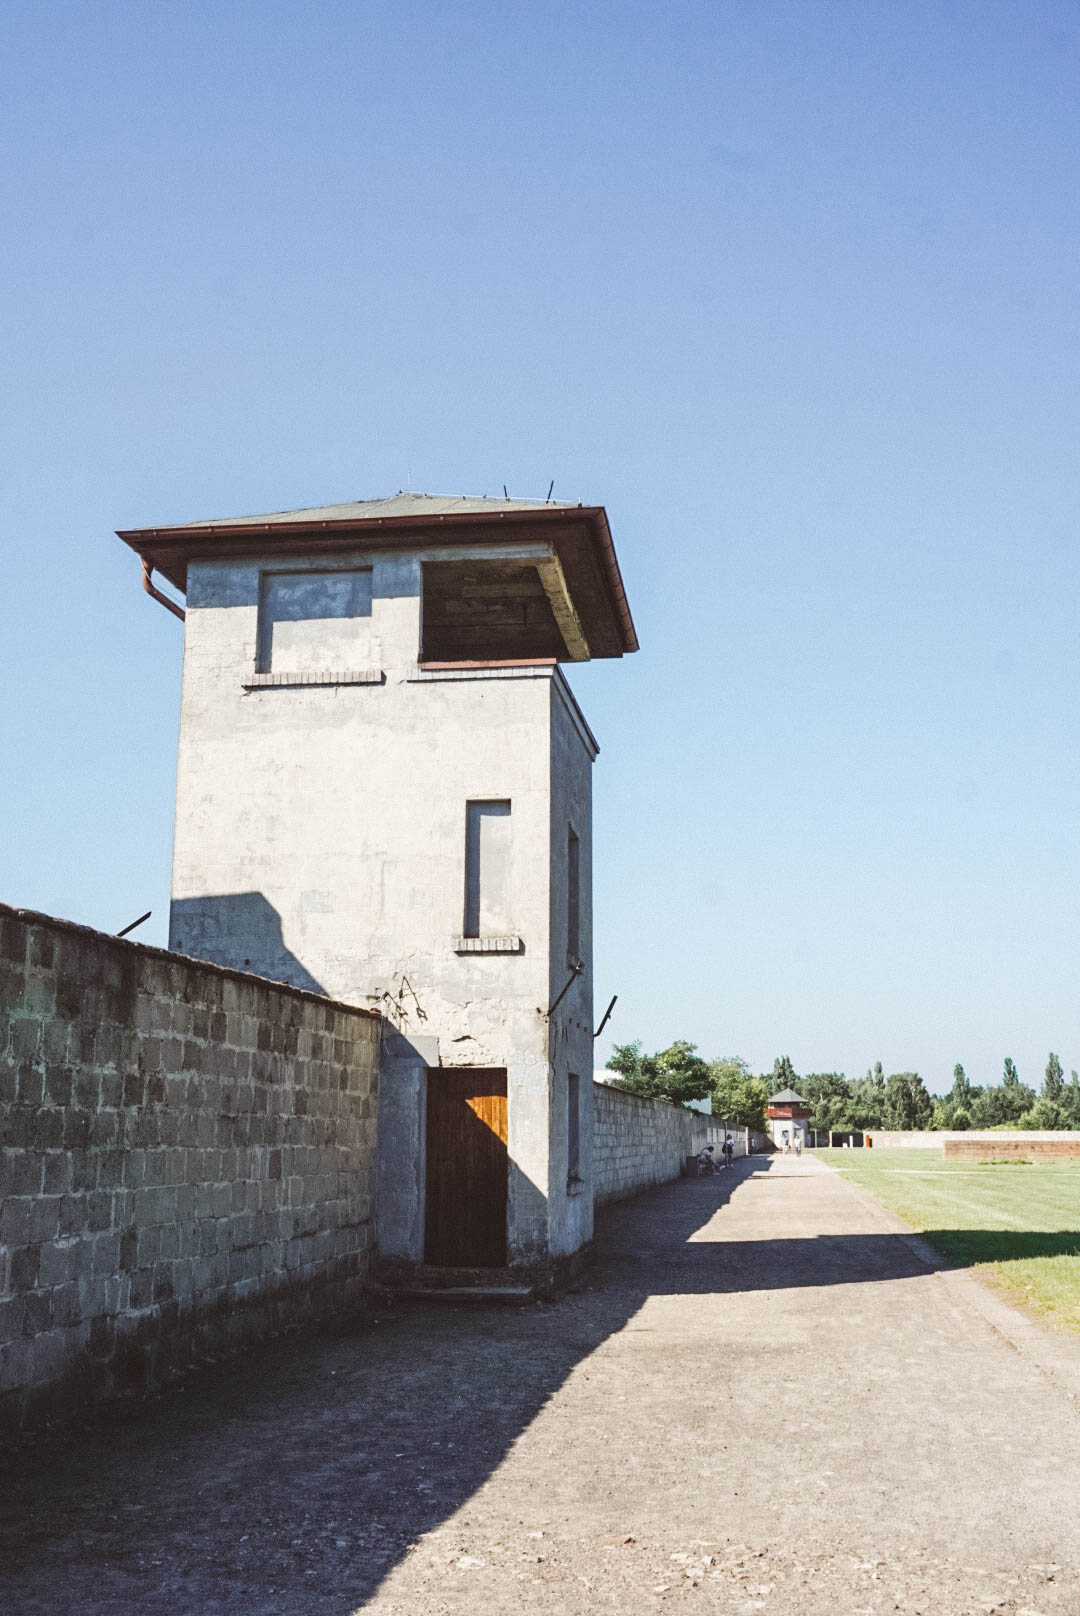 A guard tower at the Sachsenhausen Memorial in Berlin.